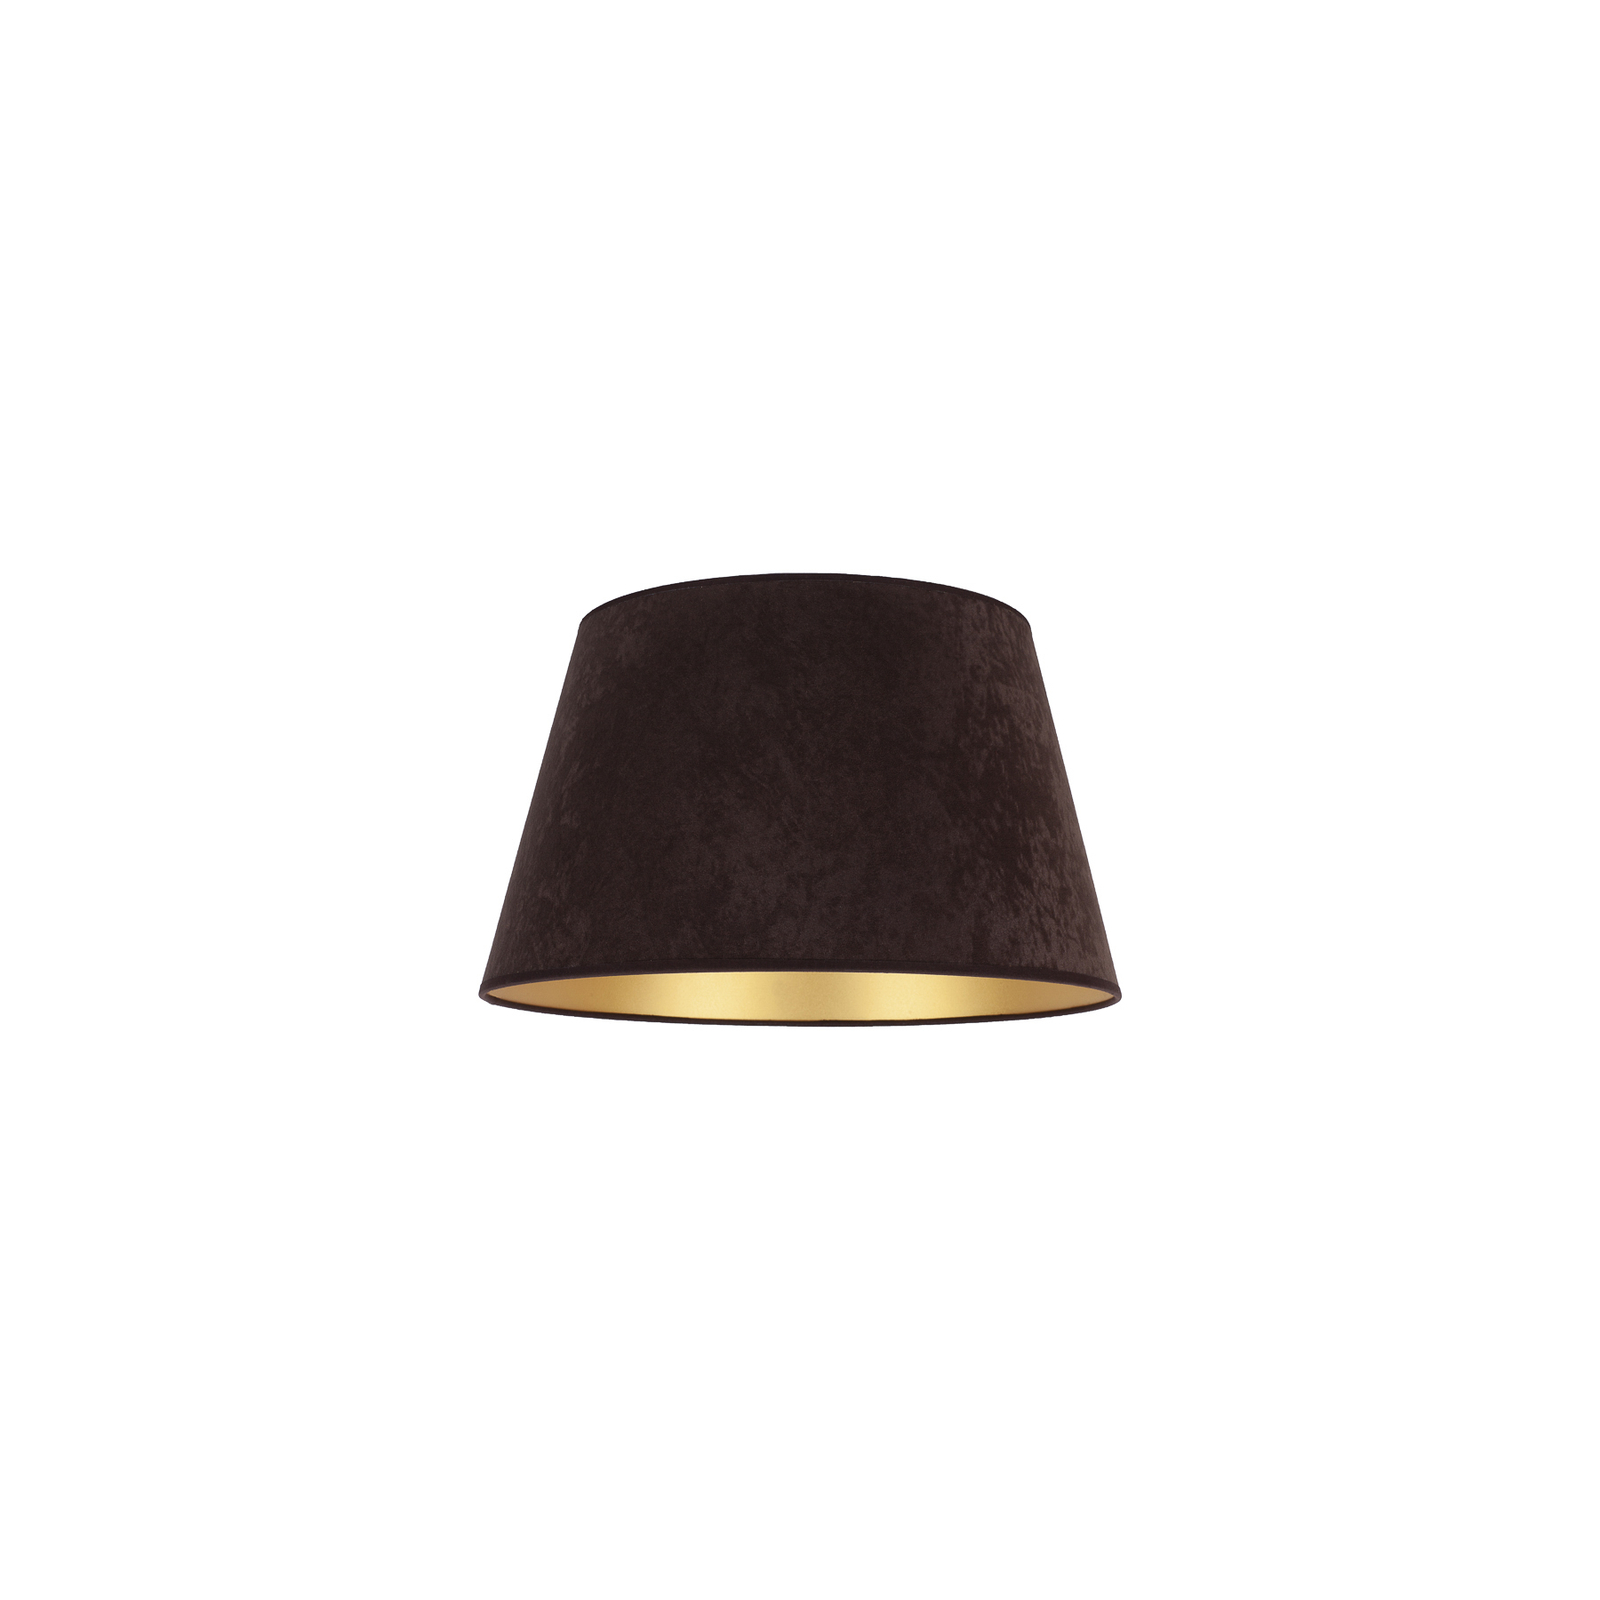 Lampenschirm Cone Höhe 18 cm, braun/gold